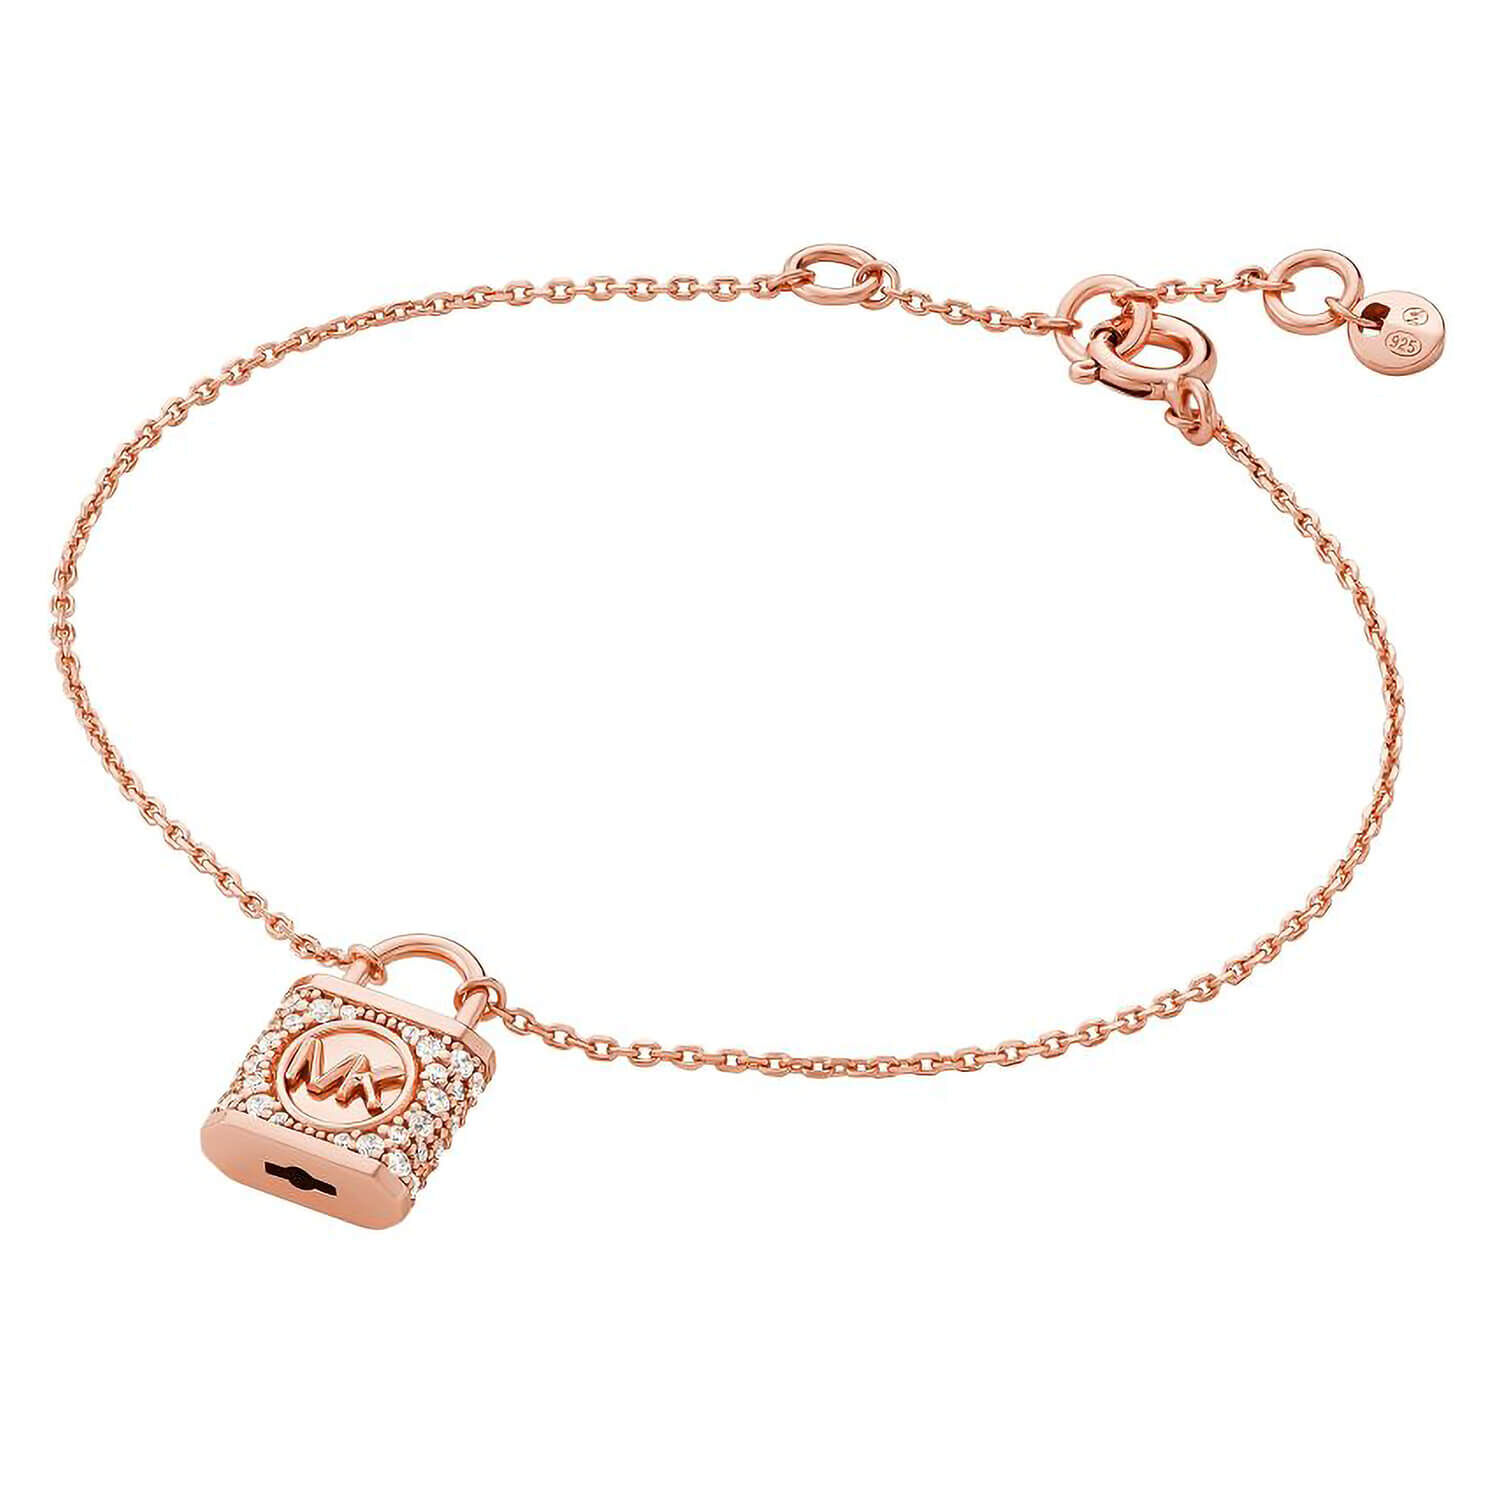 Michael Kors bracelet MKJ6352791 in rose gold plated metal at 5940